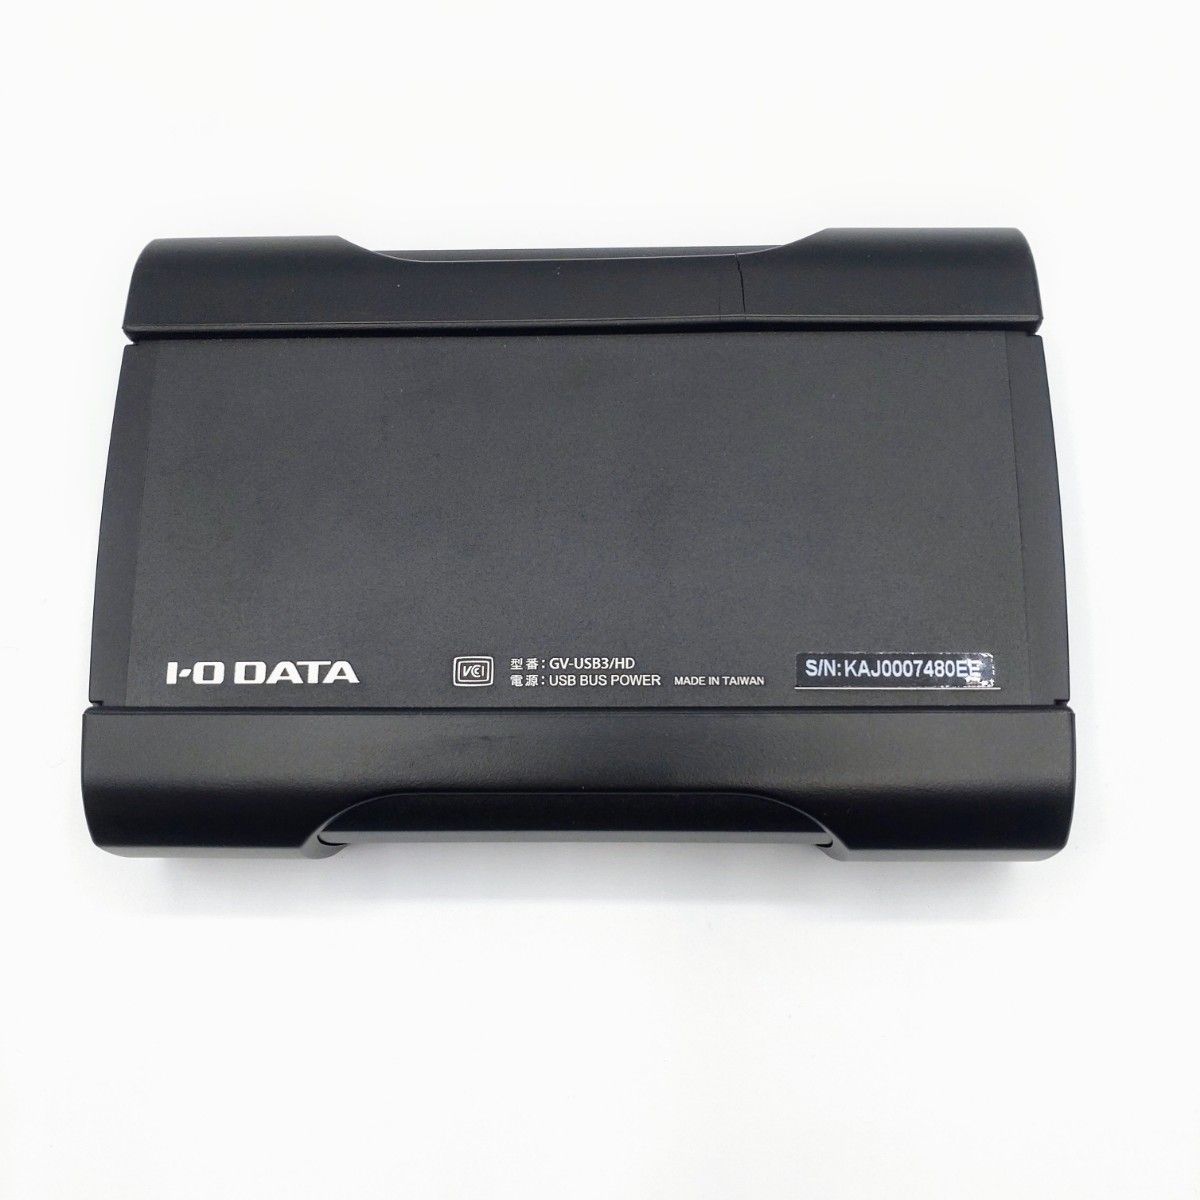 I-O DATA キャプチャーボード ゲームキャプチャー GV-USB3/HD｜PayPay